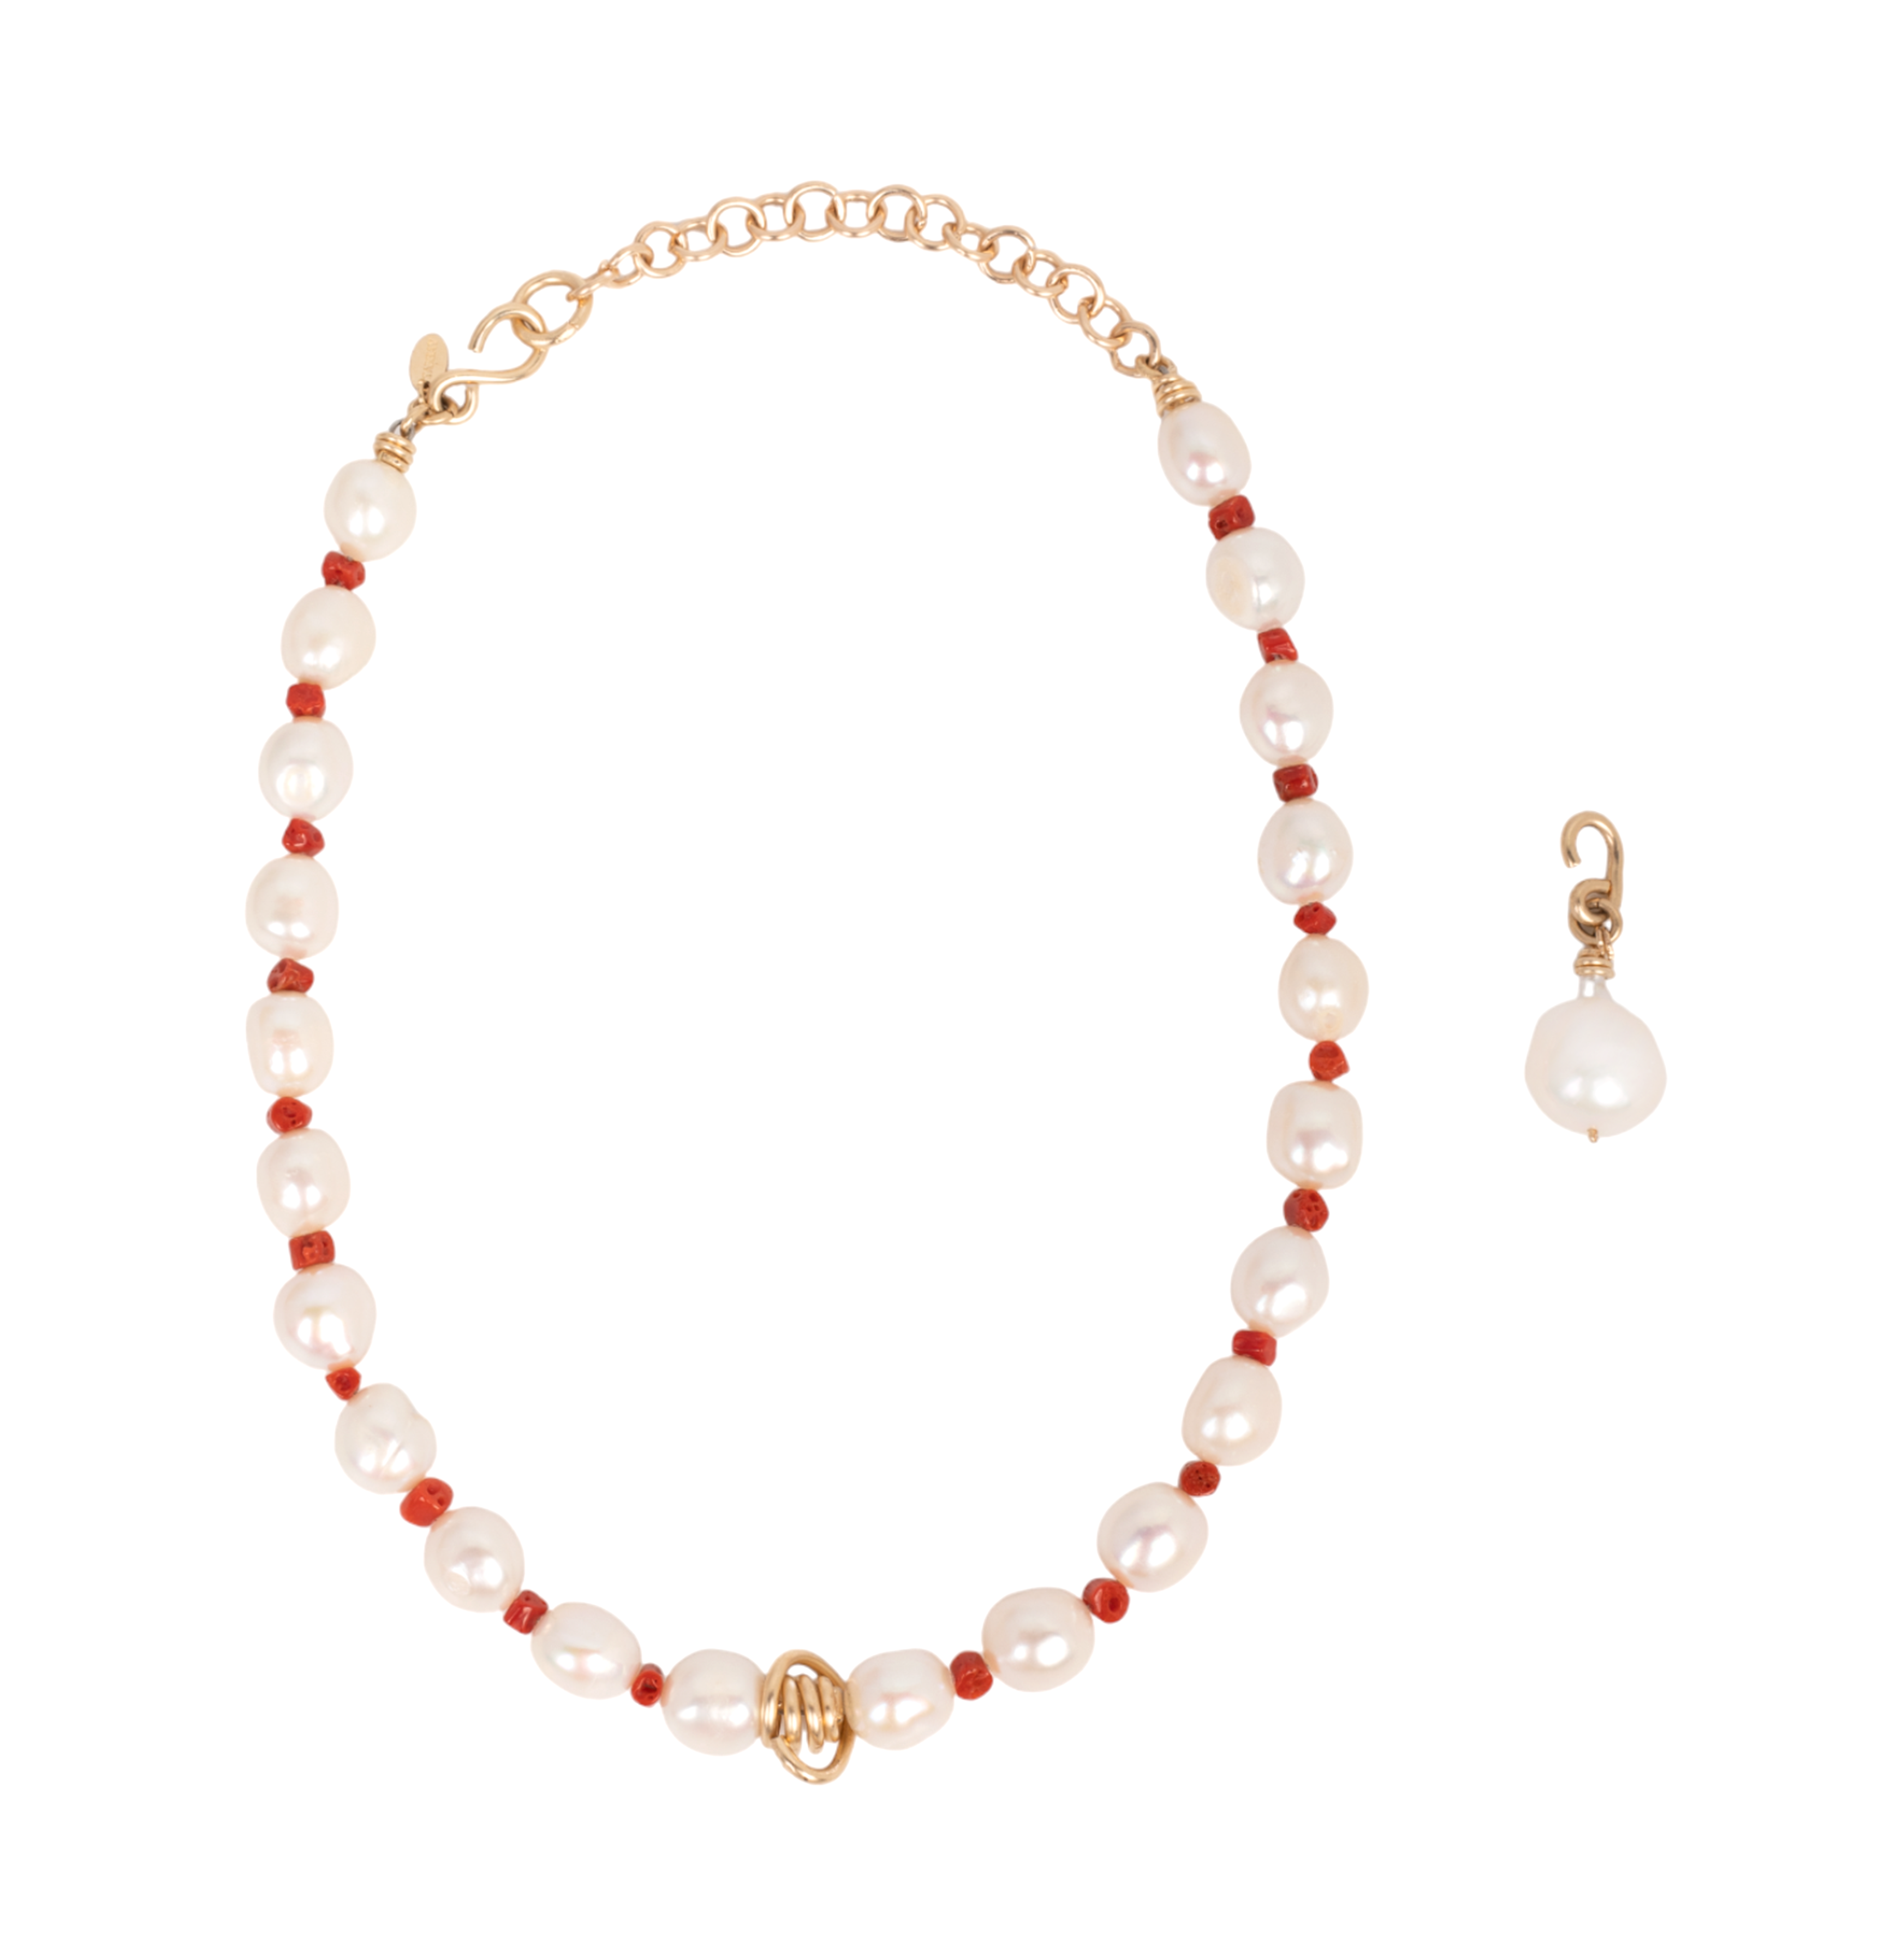 Marejada Necklace #1 - Pearl & Red Coral Necklaces TARBAY   